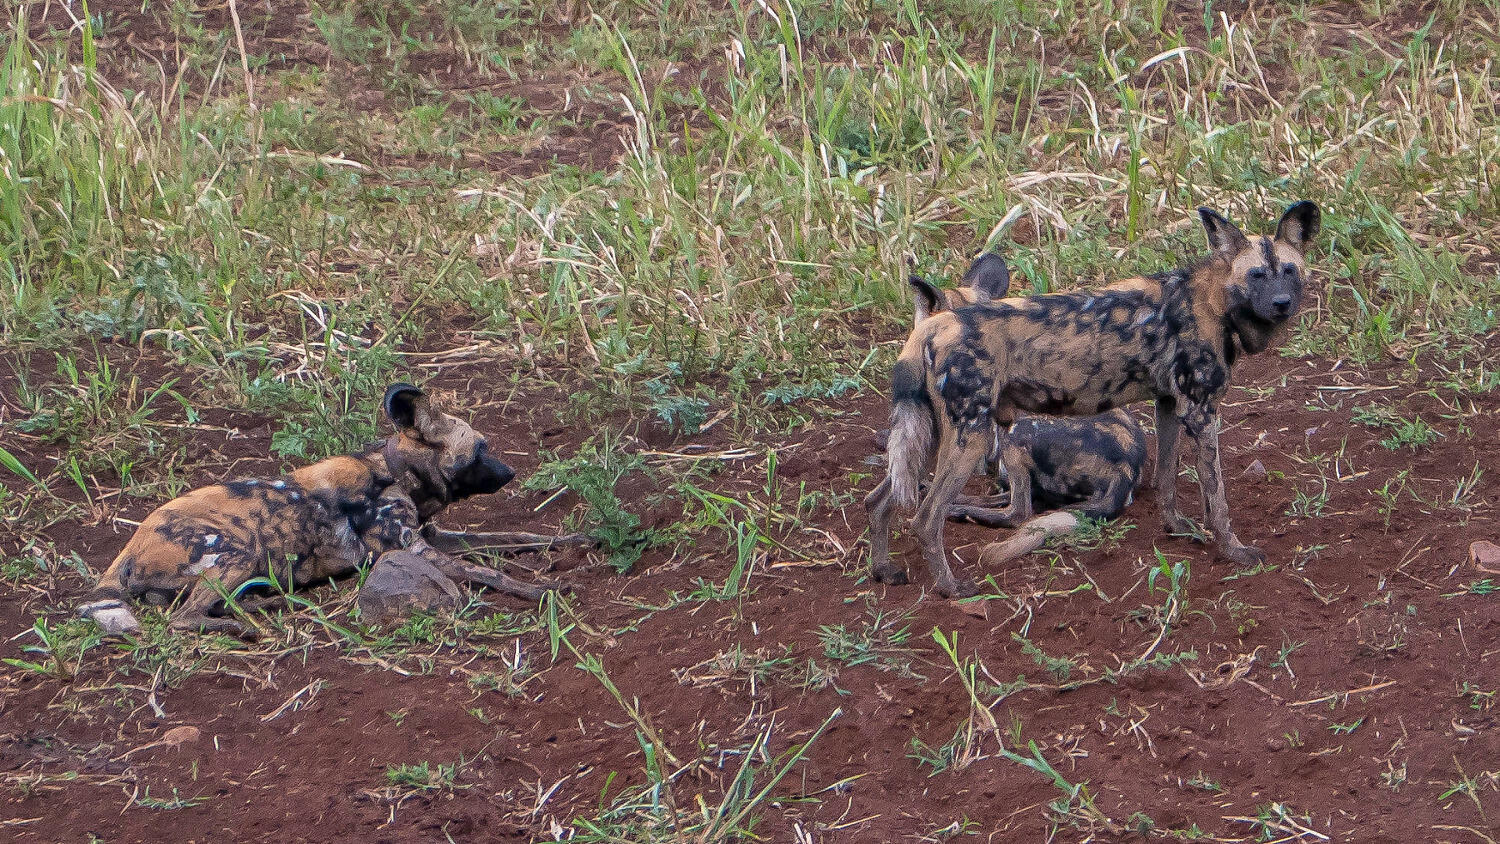 Wild dogs rest in Somkhanda Game Reserve in Mkuze, KwaZulu-Natal, South Africa.
<br>Photo by James Vonesh.